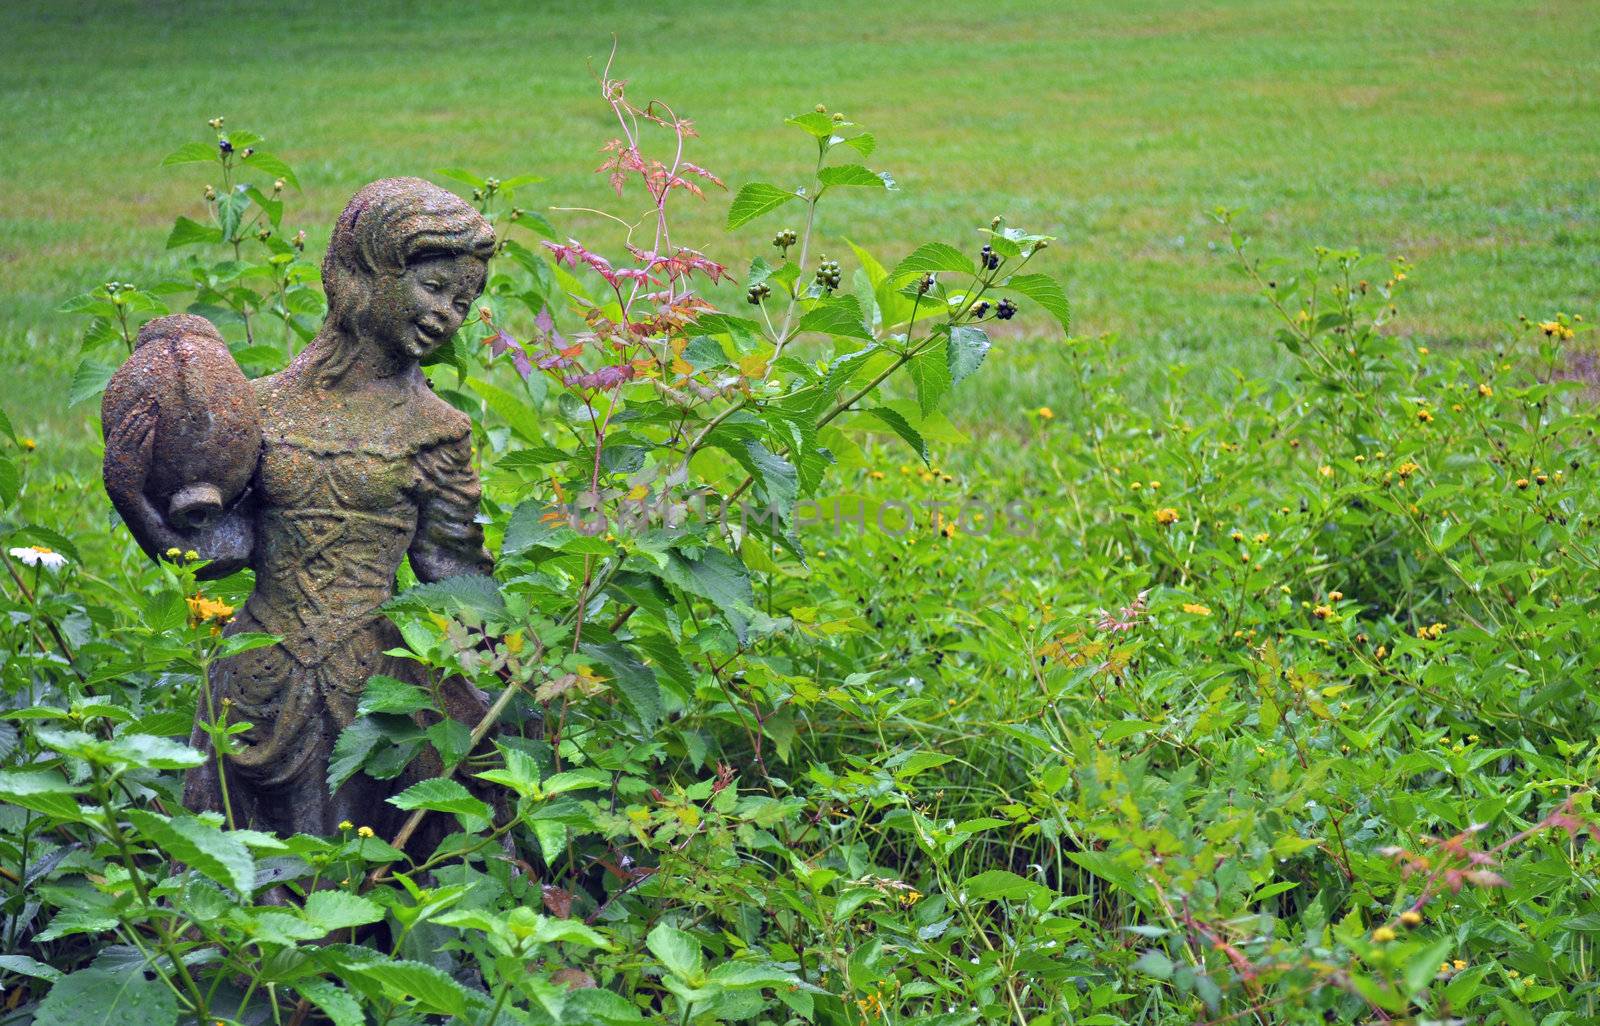 Girl statue in garden - background 2 by RefocusPhoto